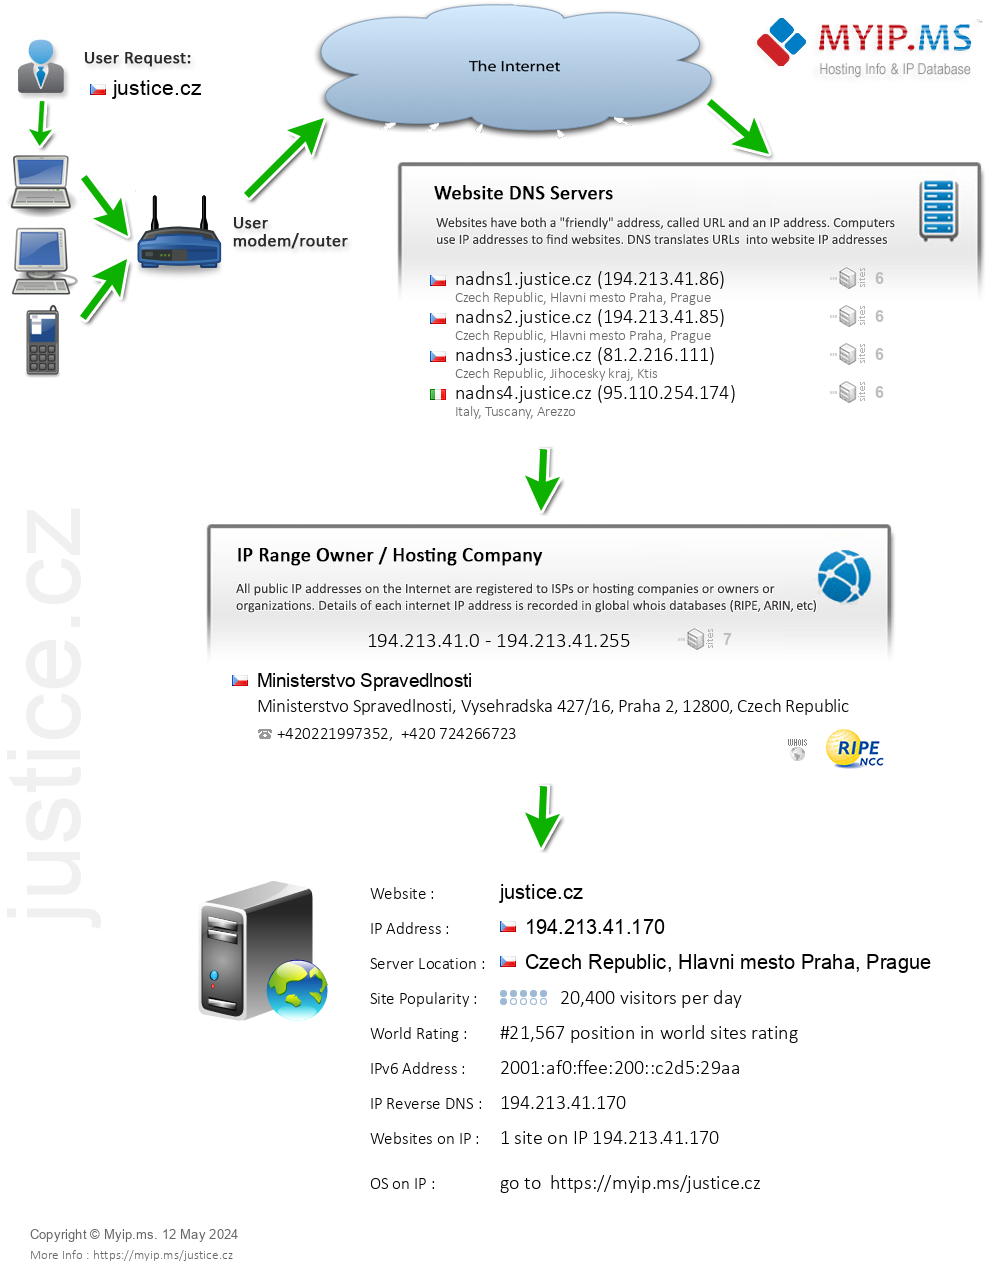 Justice.cz - Website Hosting Visual IP Diagram